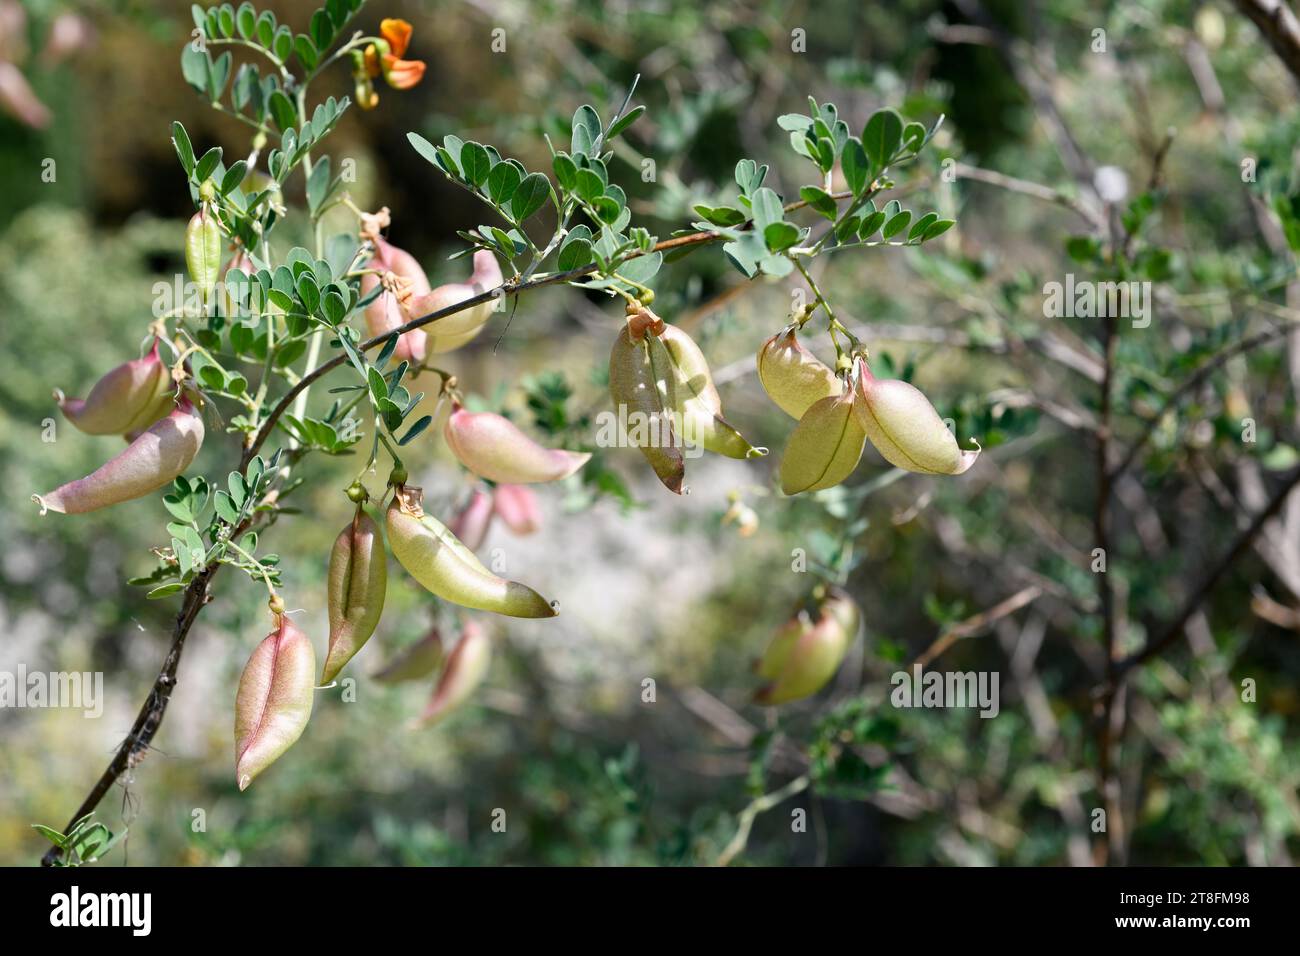 Bladder-senna (Colutea orientalis) is a deciduous shrub native to eastern Europe. Fruits detail. Stock Photo